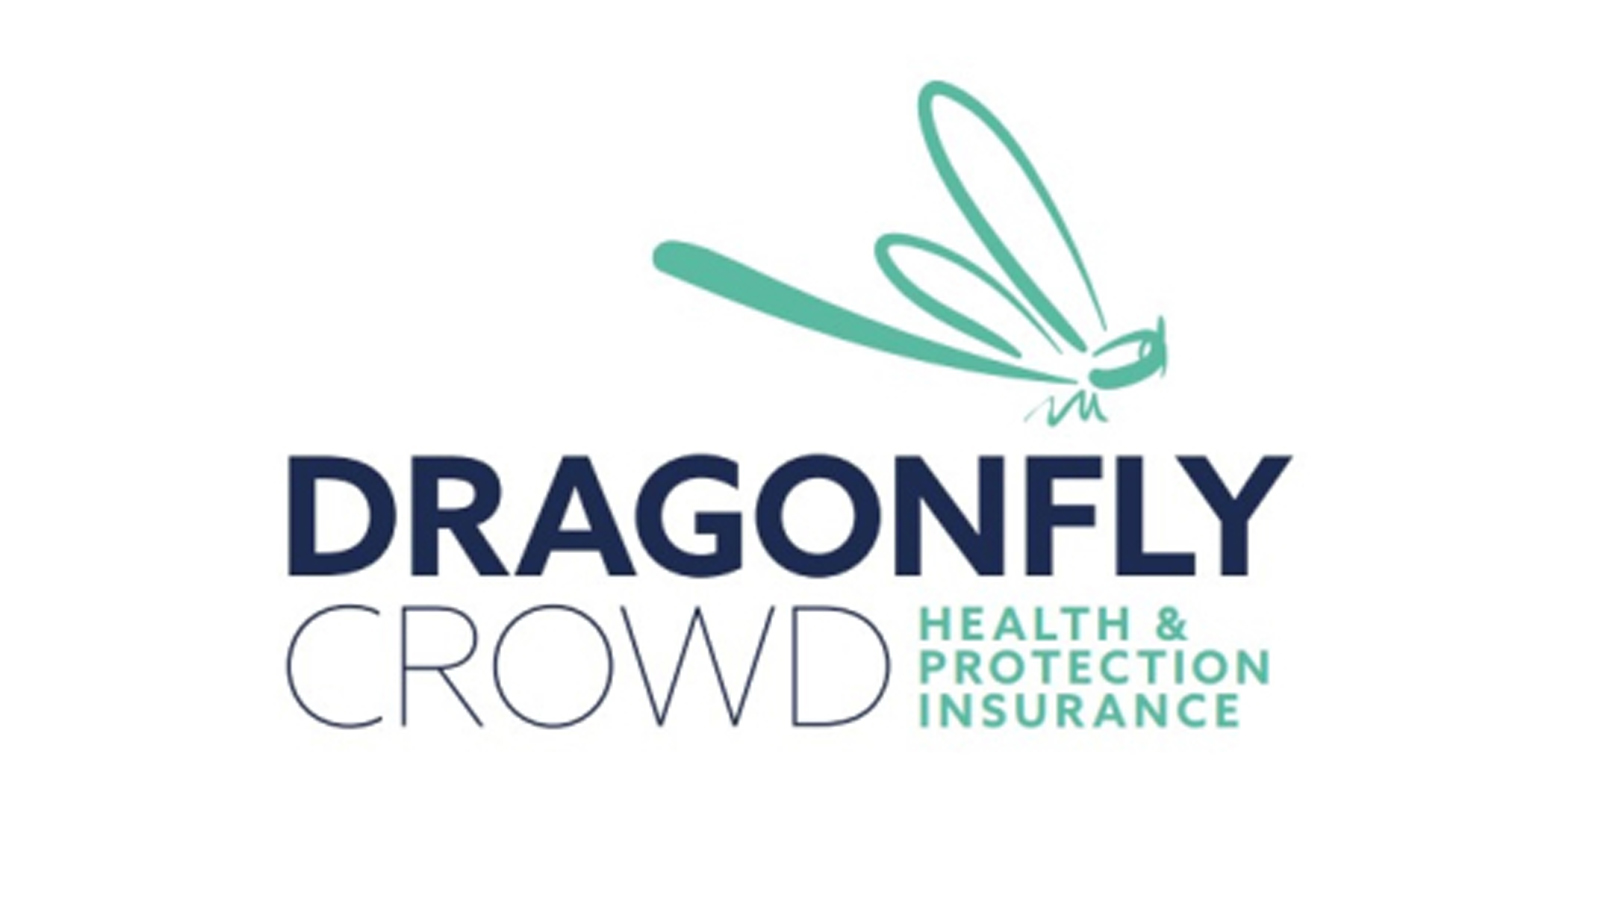 Dragonfly Crowd